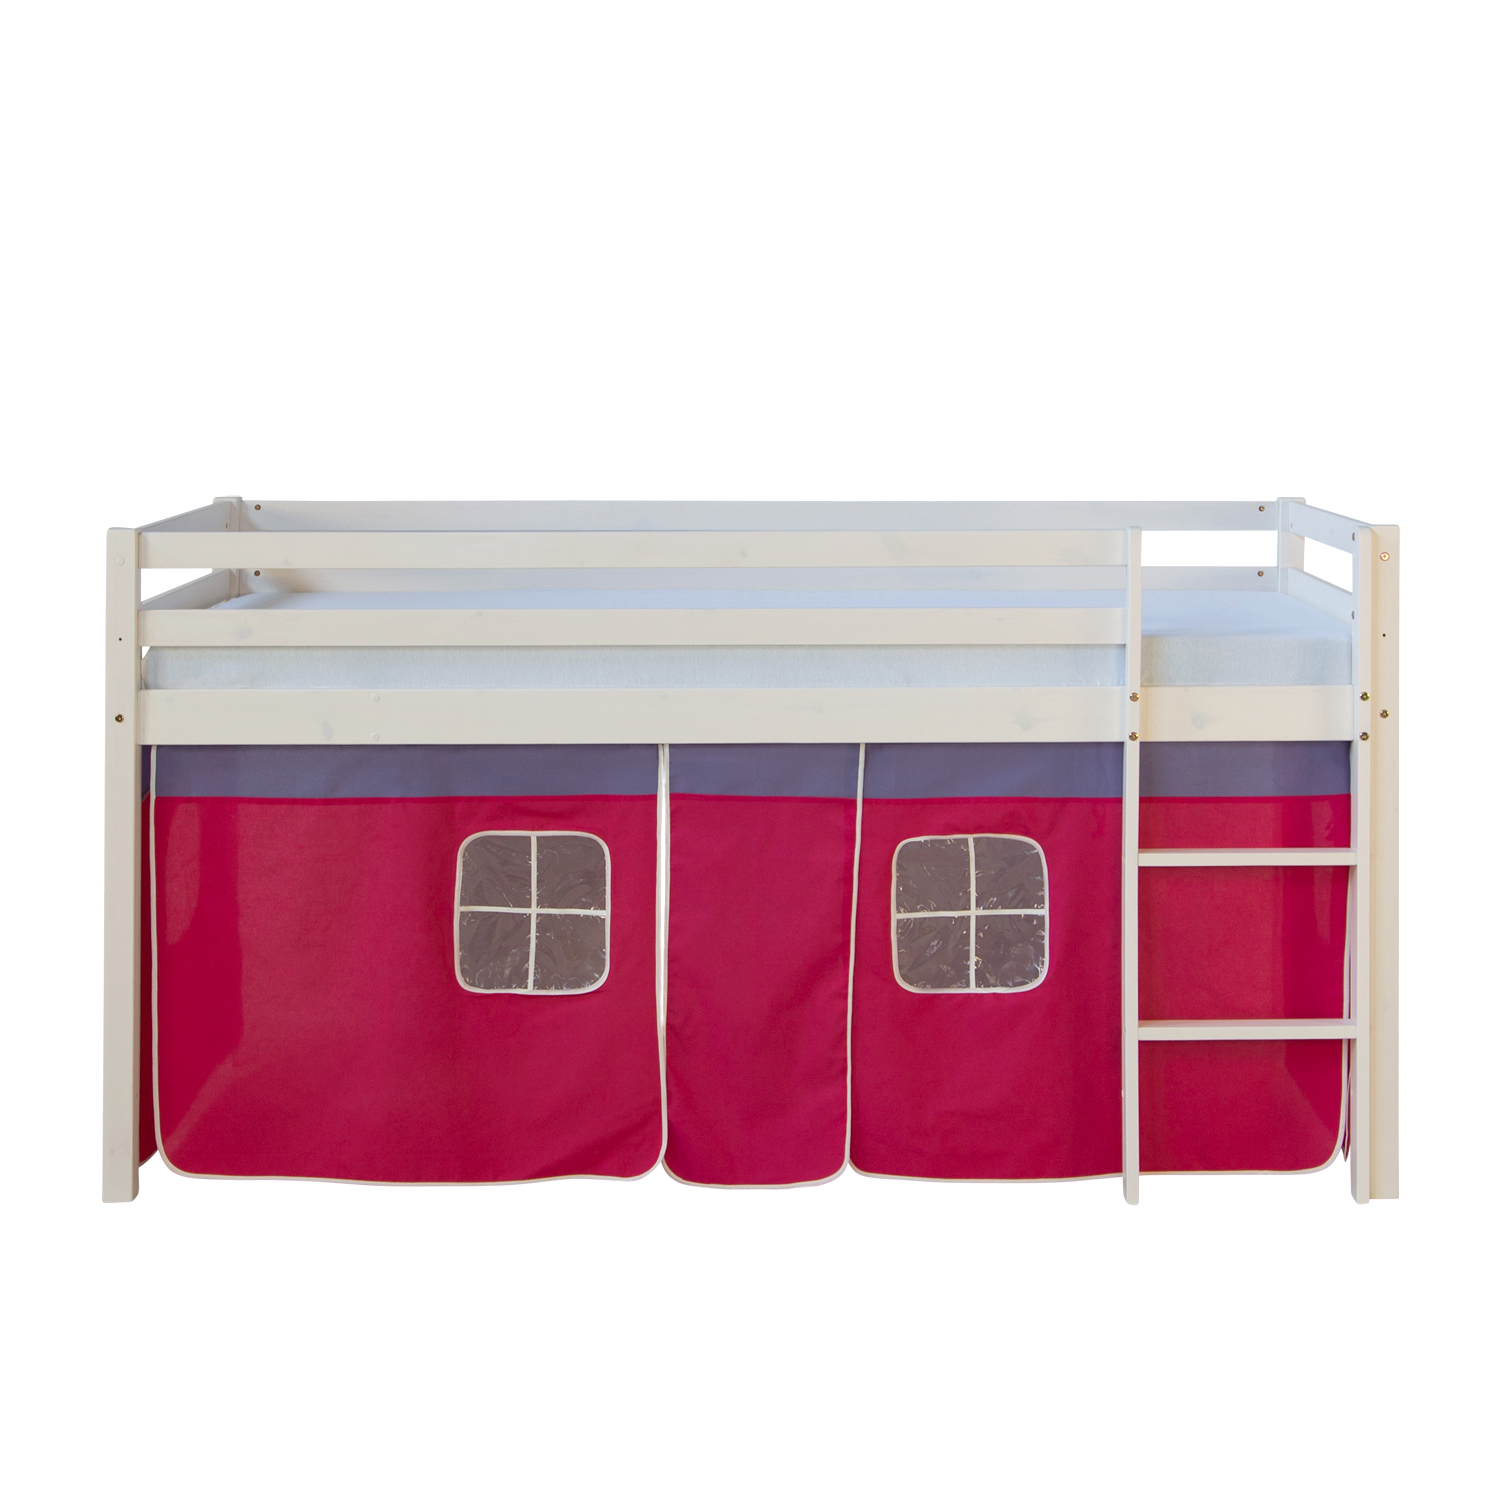 Kinderbett Hochbett Massiv Kiefer weiß pinker Vorhang,Spielbett